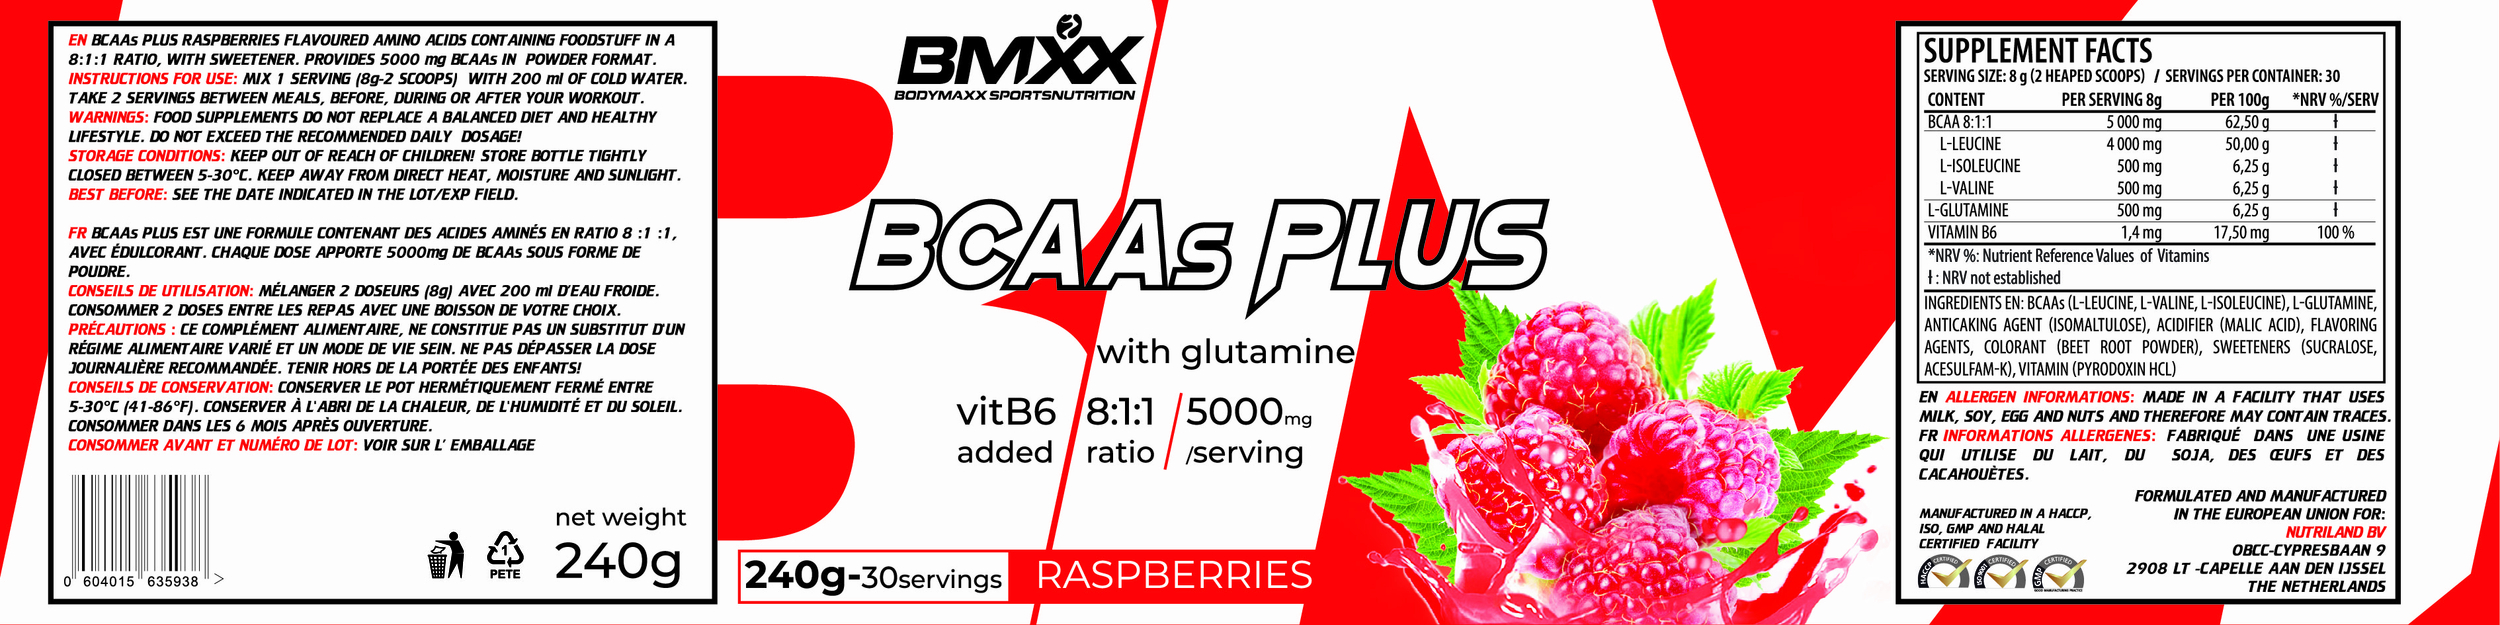 BMXX_BCAAplus_spec_raspberries_CURVED-01